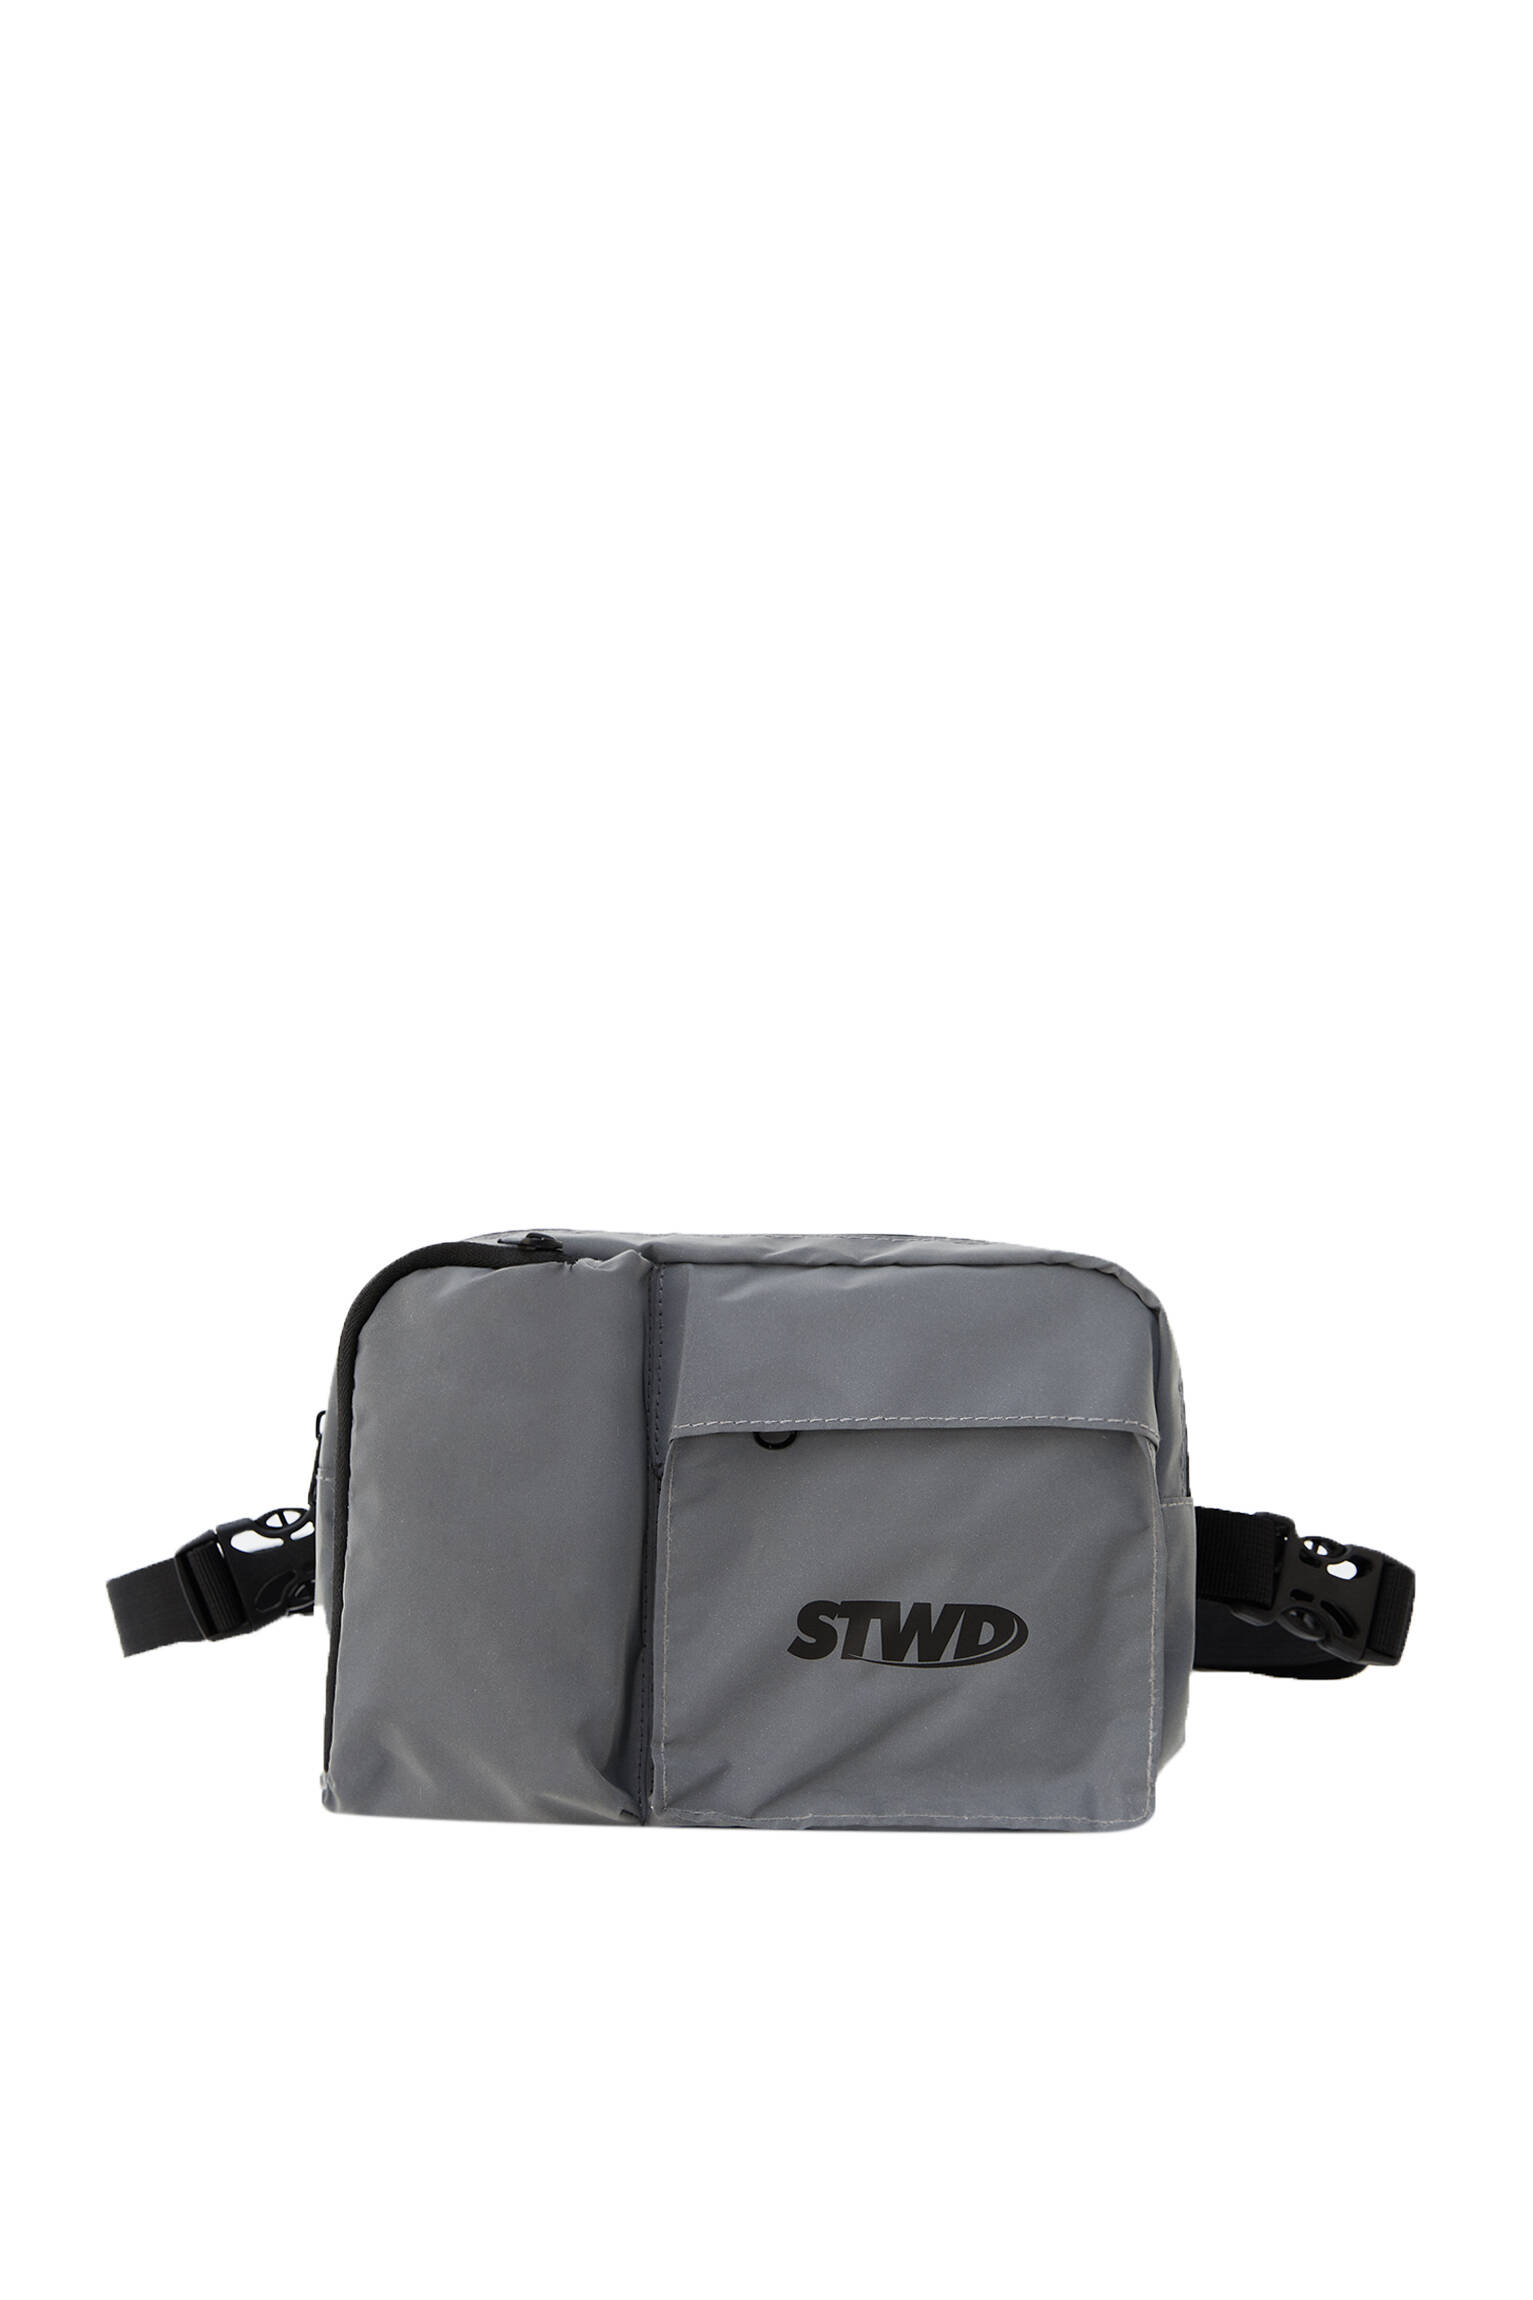 Поясная сумка STWD из светоотражающей ткани РАЗНЫЕ Pull & Bear